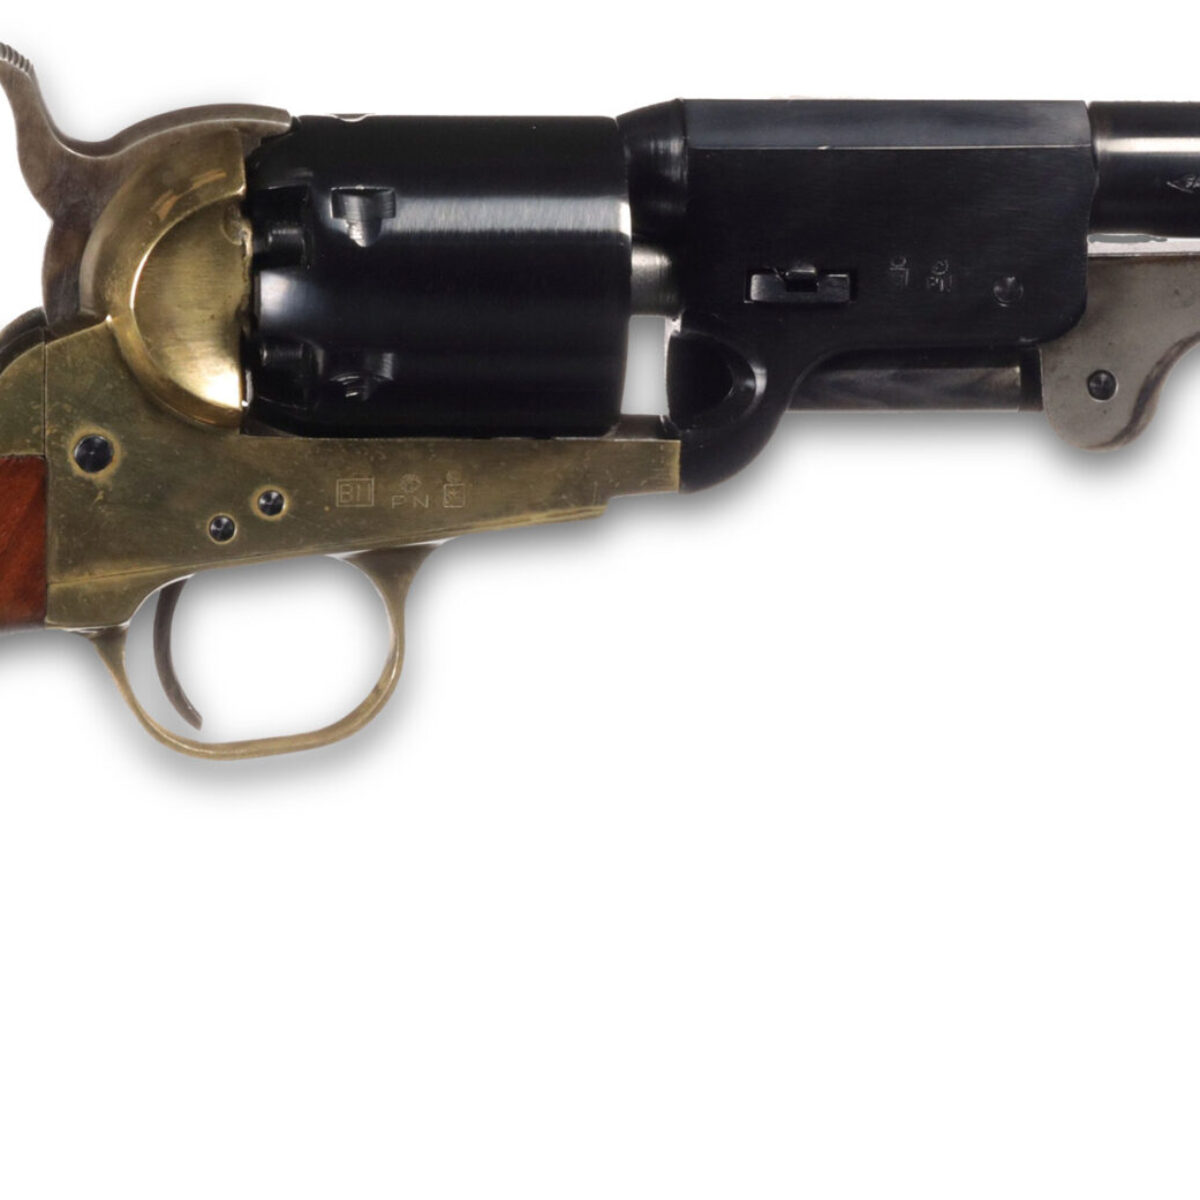 Navy Arms’ “Reb” revolver